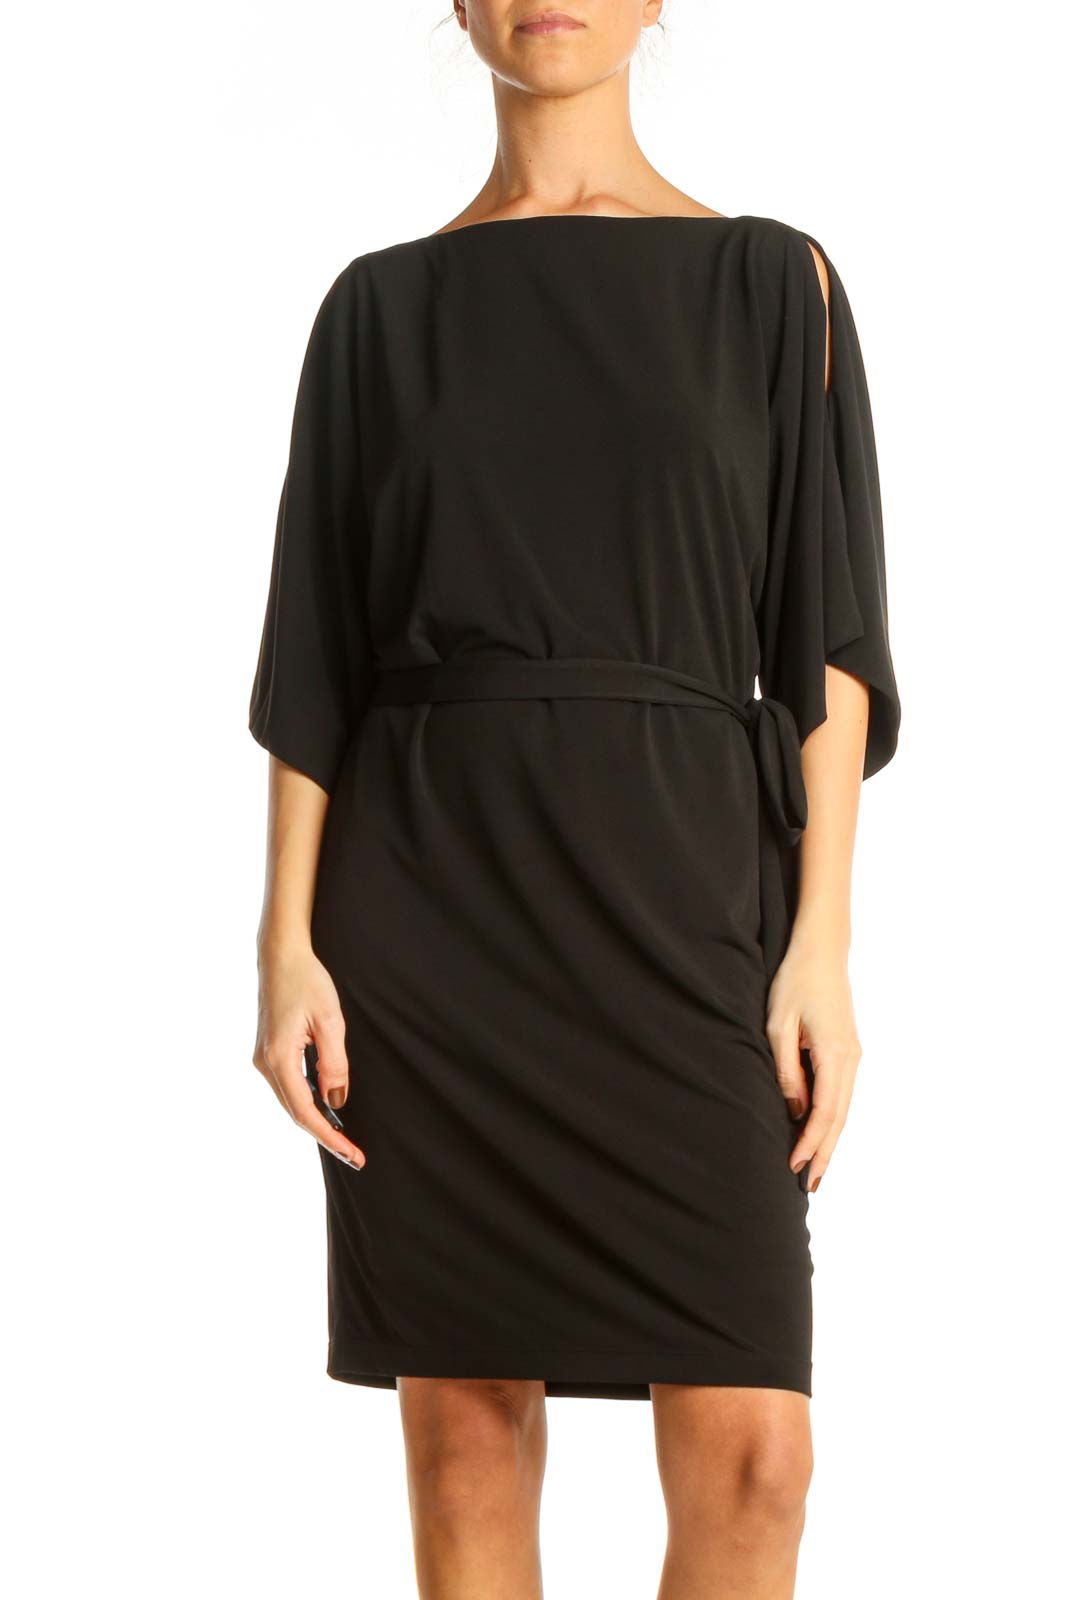 Black Solid Classic Sheath Dress Front